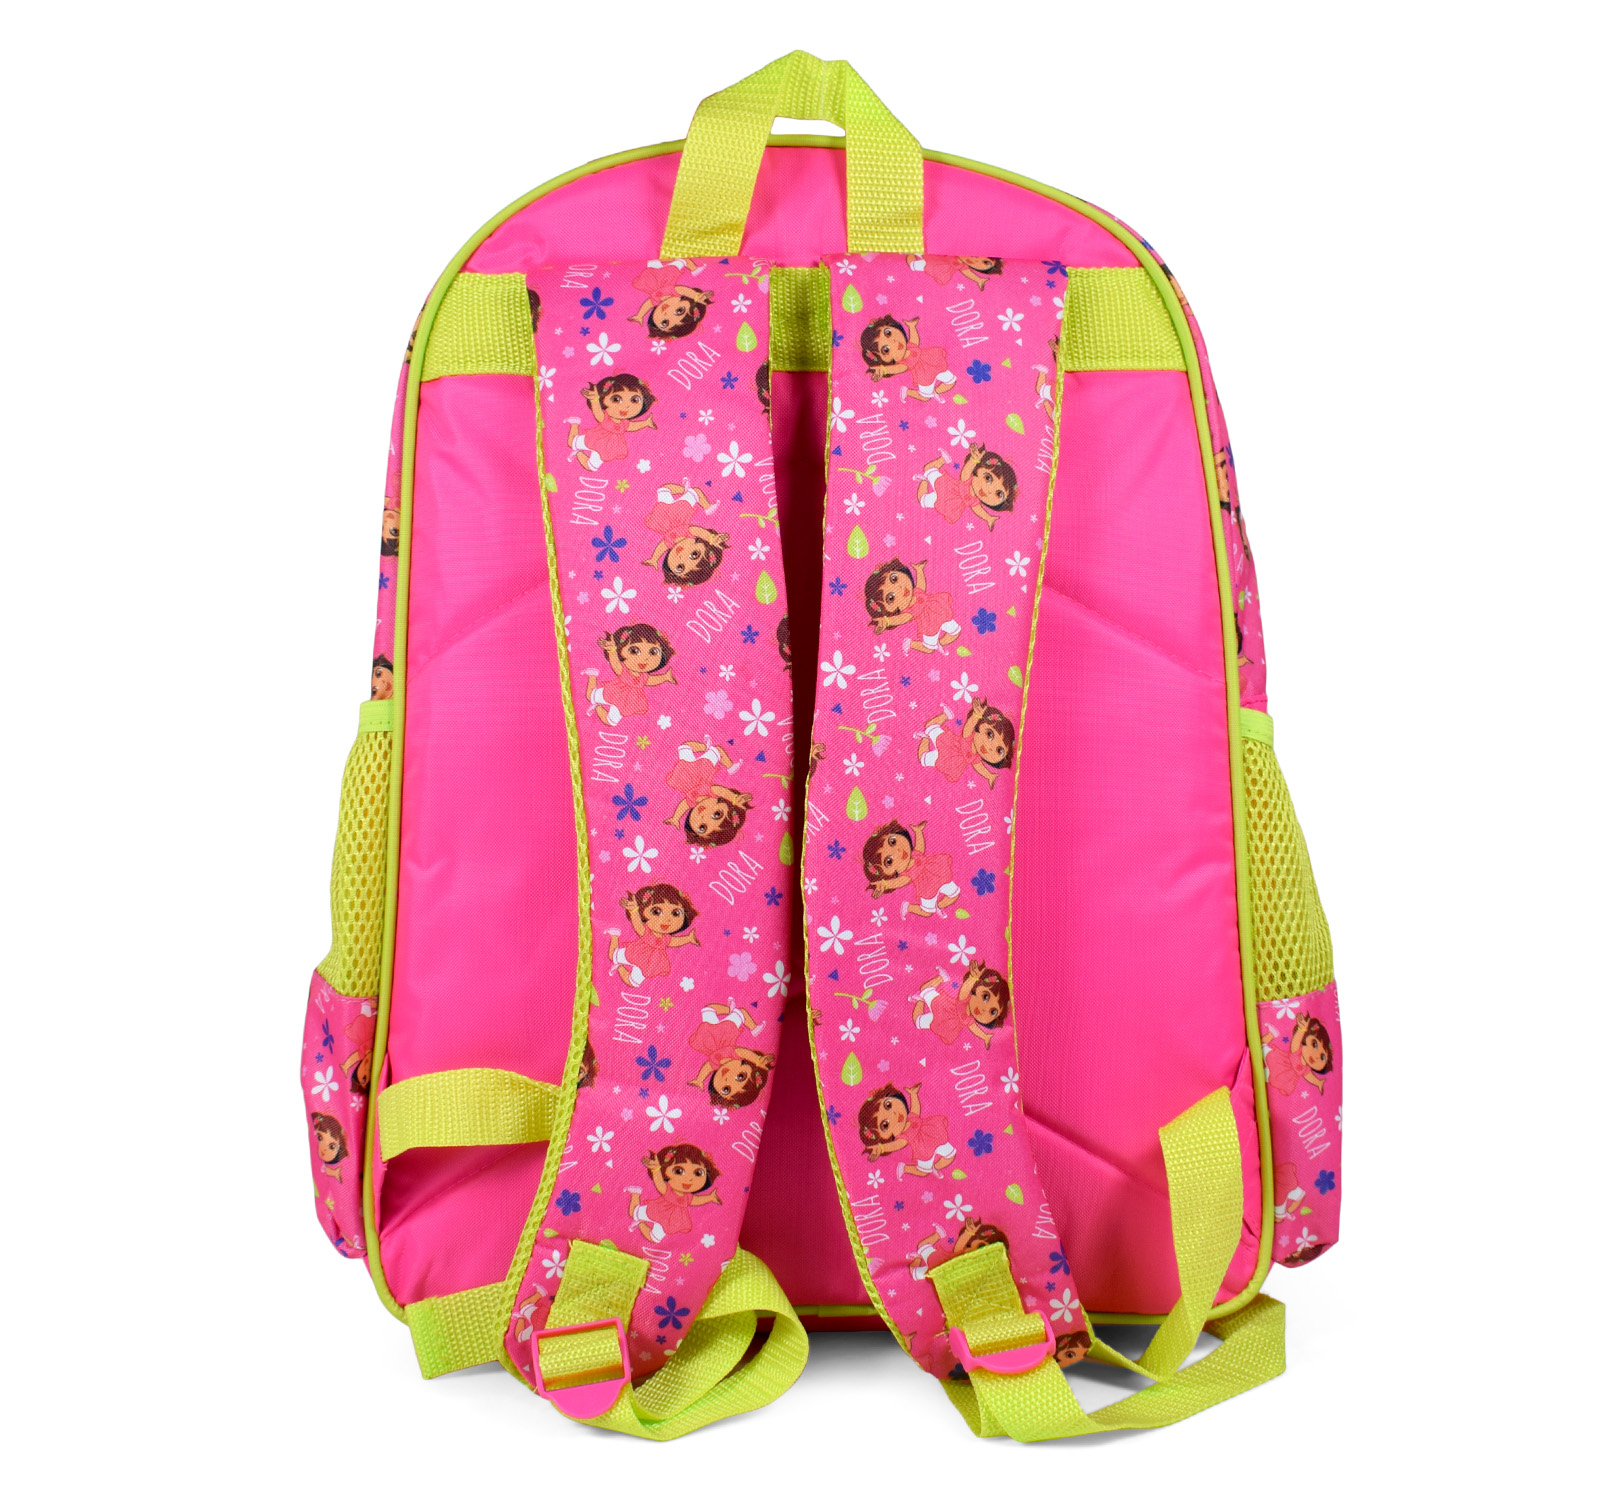 Dora The Explorer School Bag Yellow/Pink – 16 inches – Baby's World